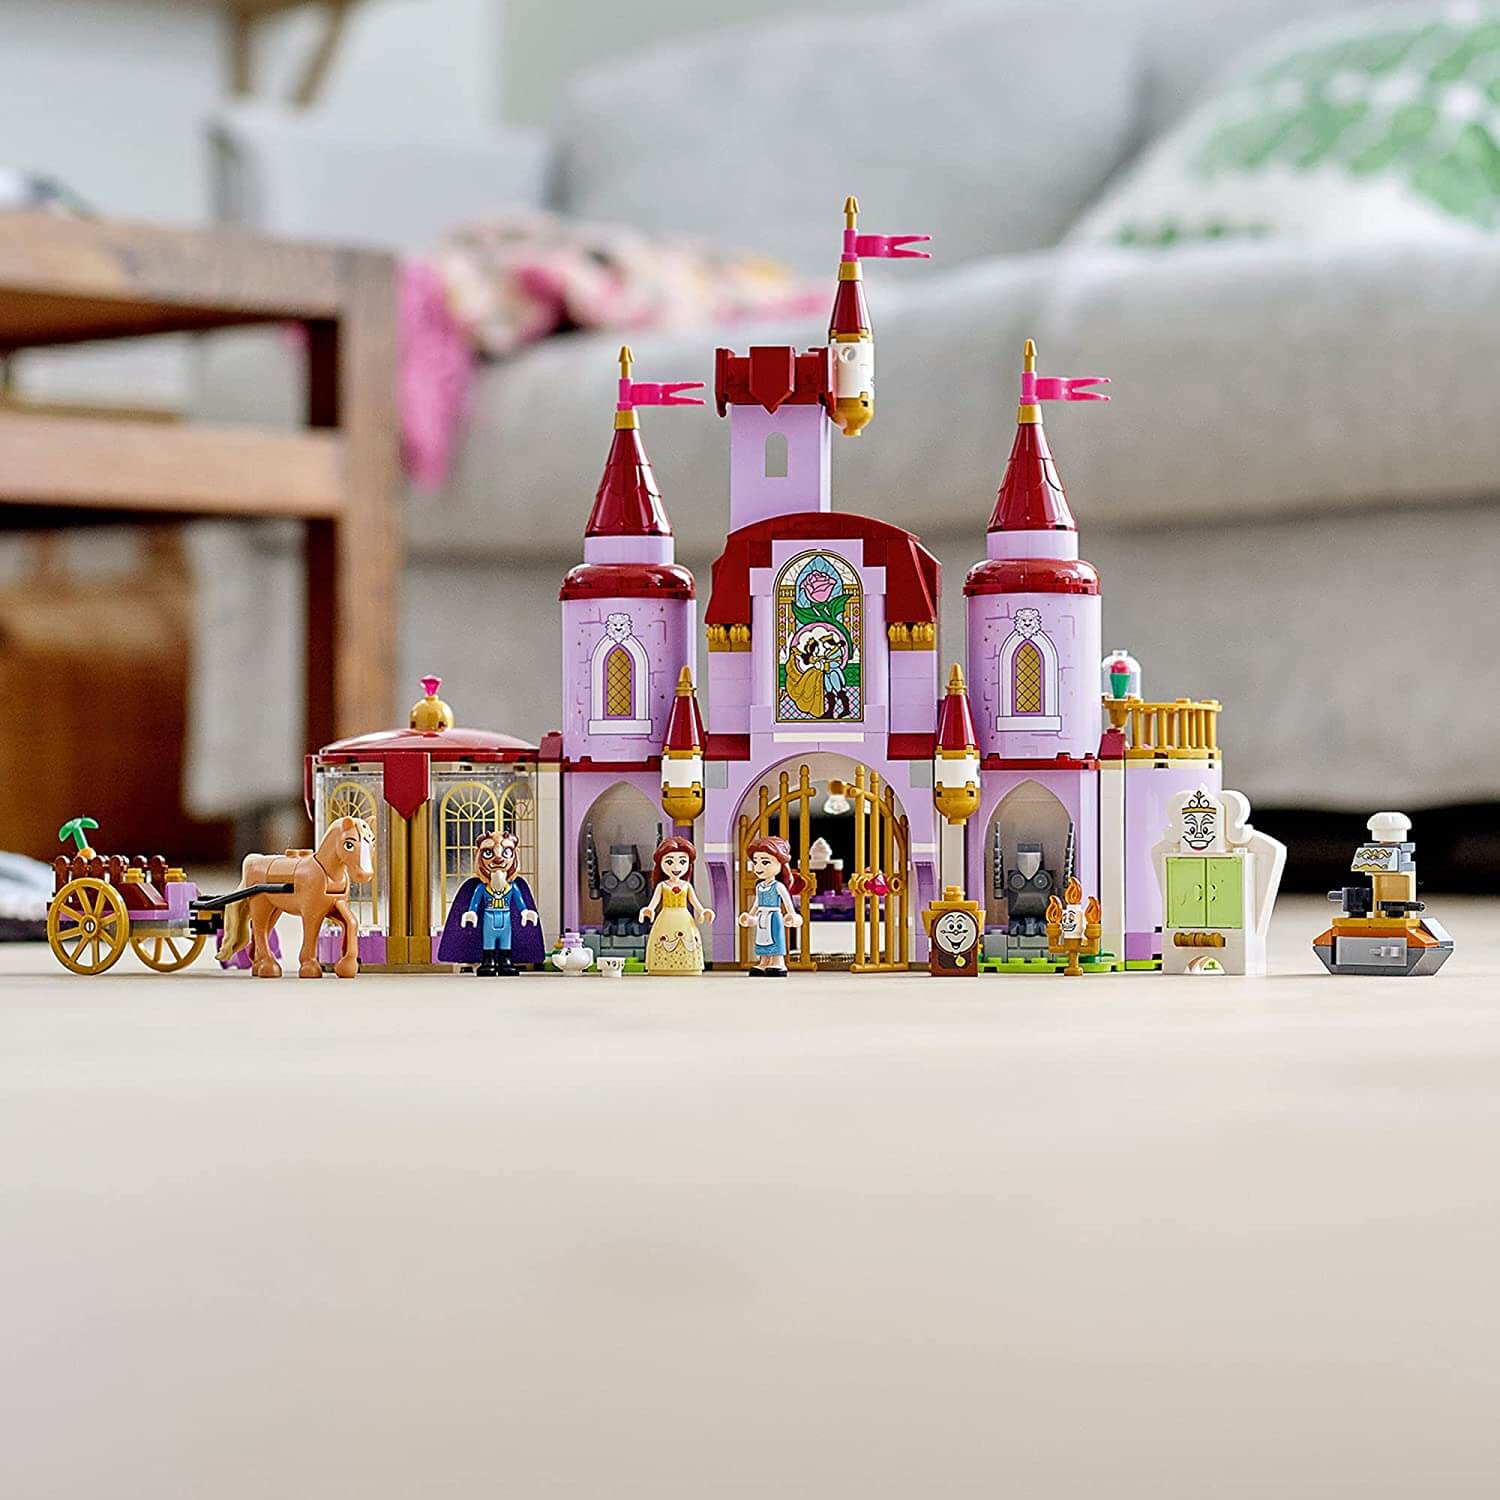 LEGO Disney Princess Belle and the Beast's Castle 505 Piece Building Set (43196)